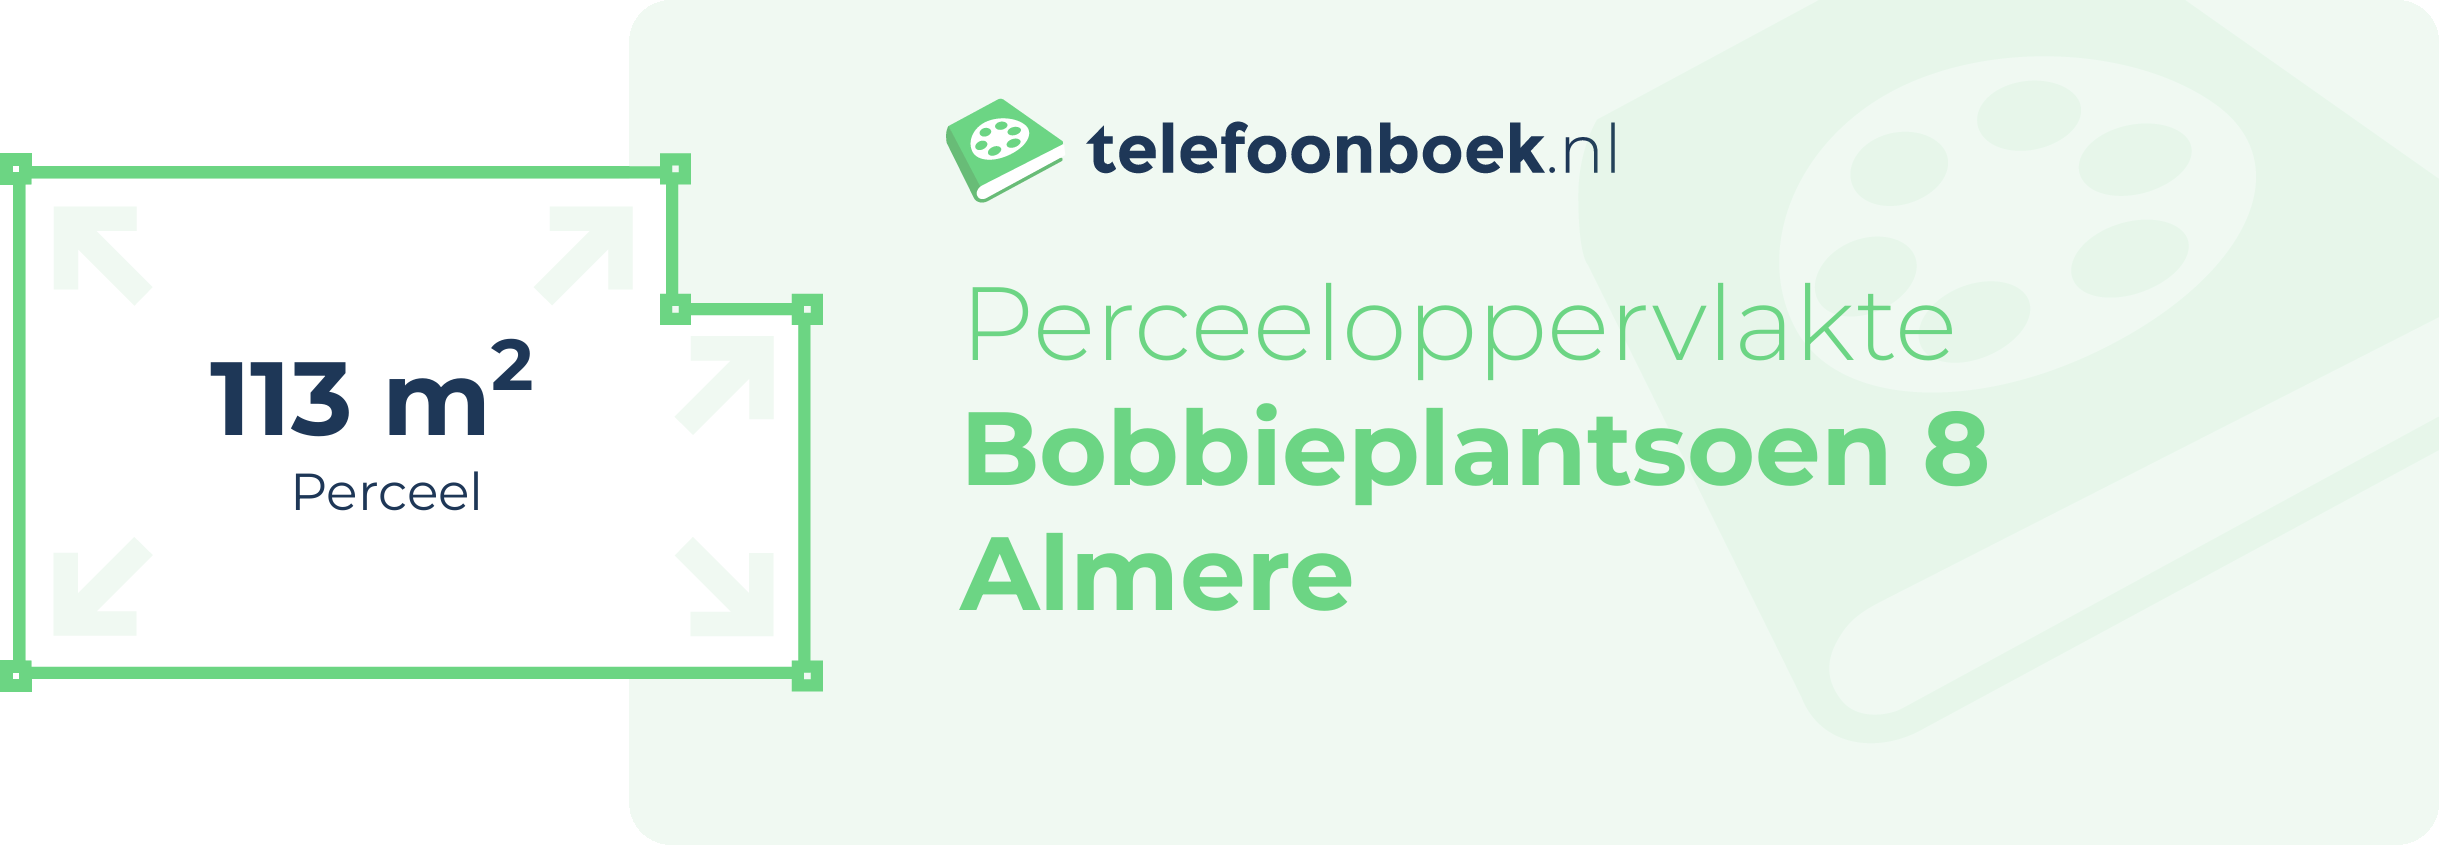 Perceeloppervlakte Bobbieplantsoen 8 Almere